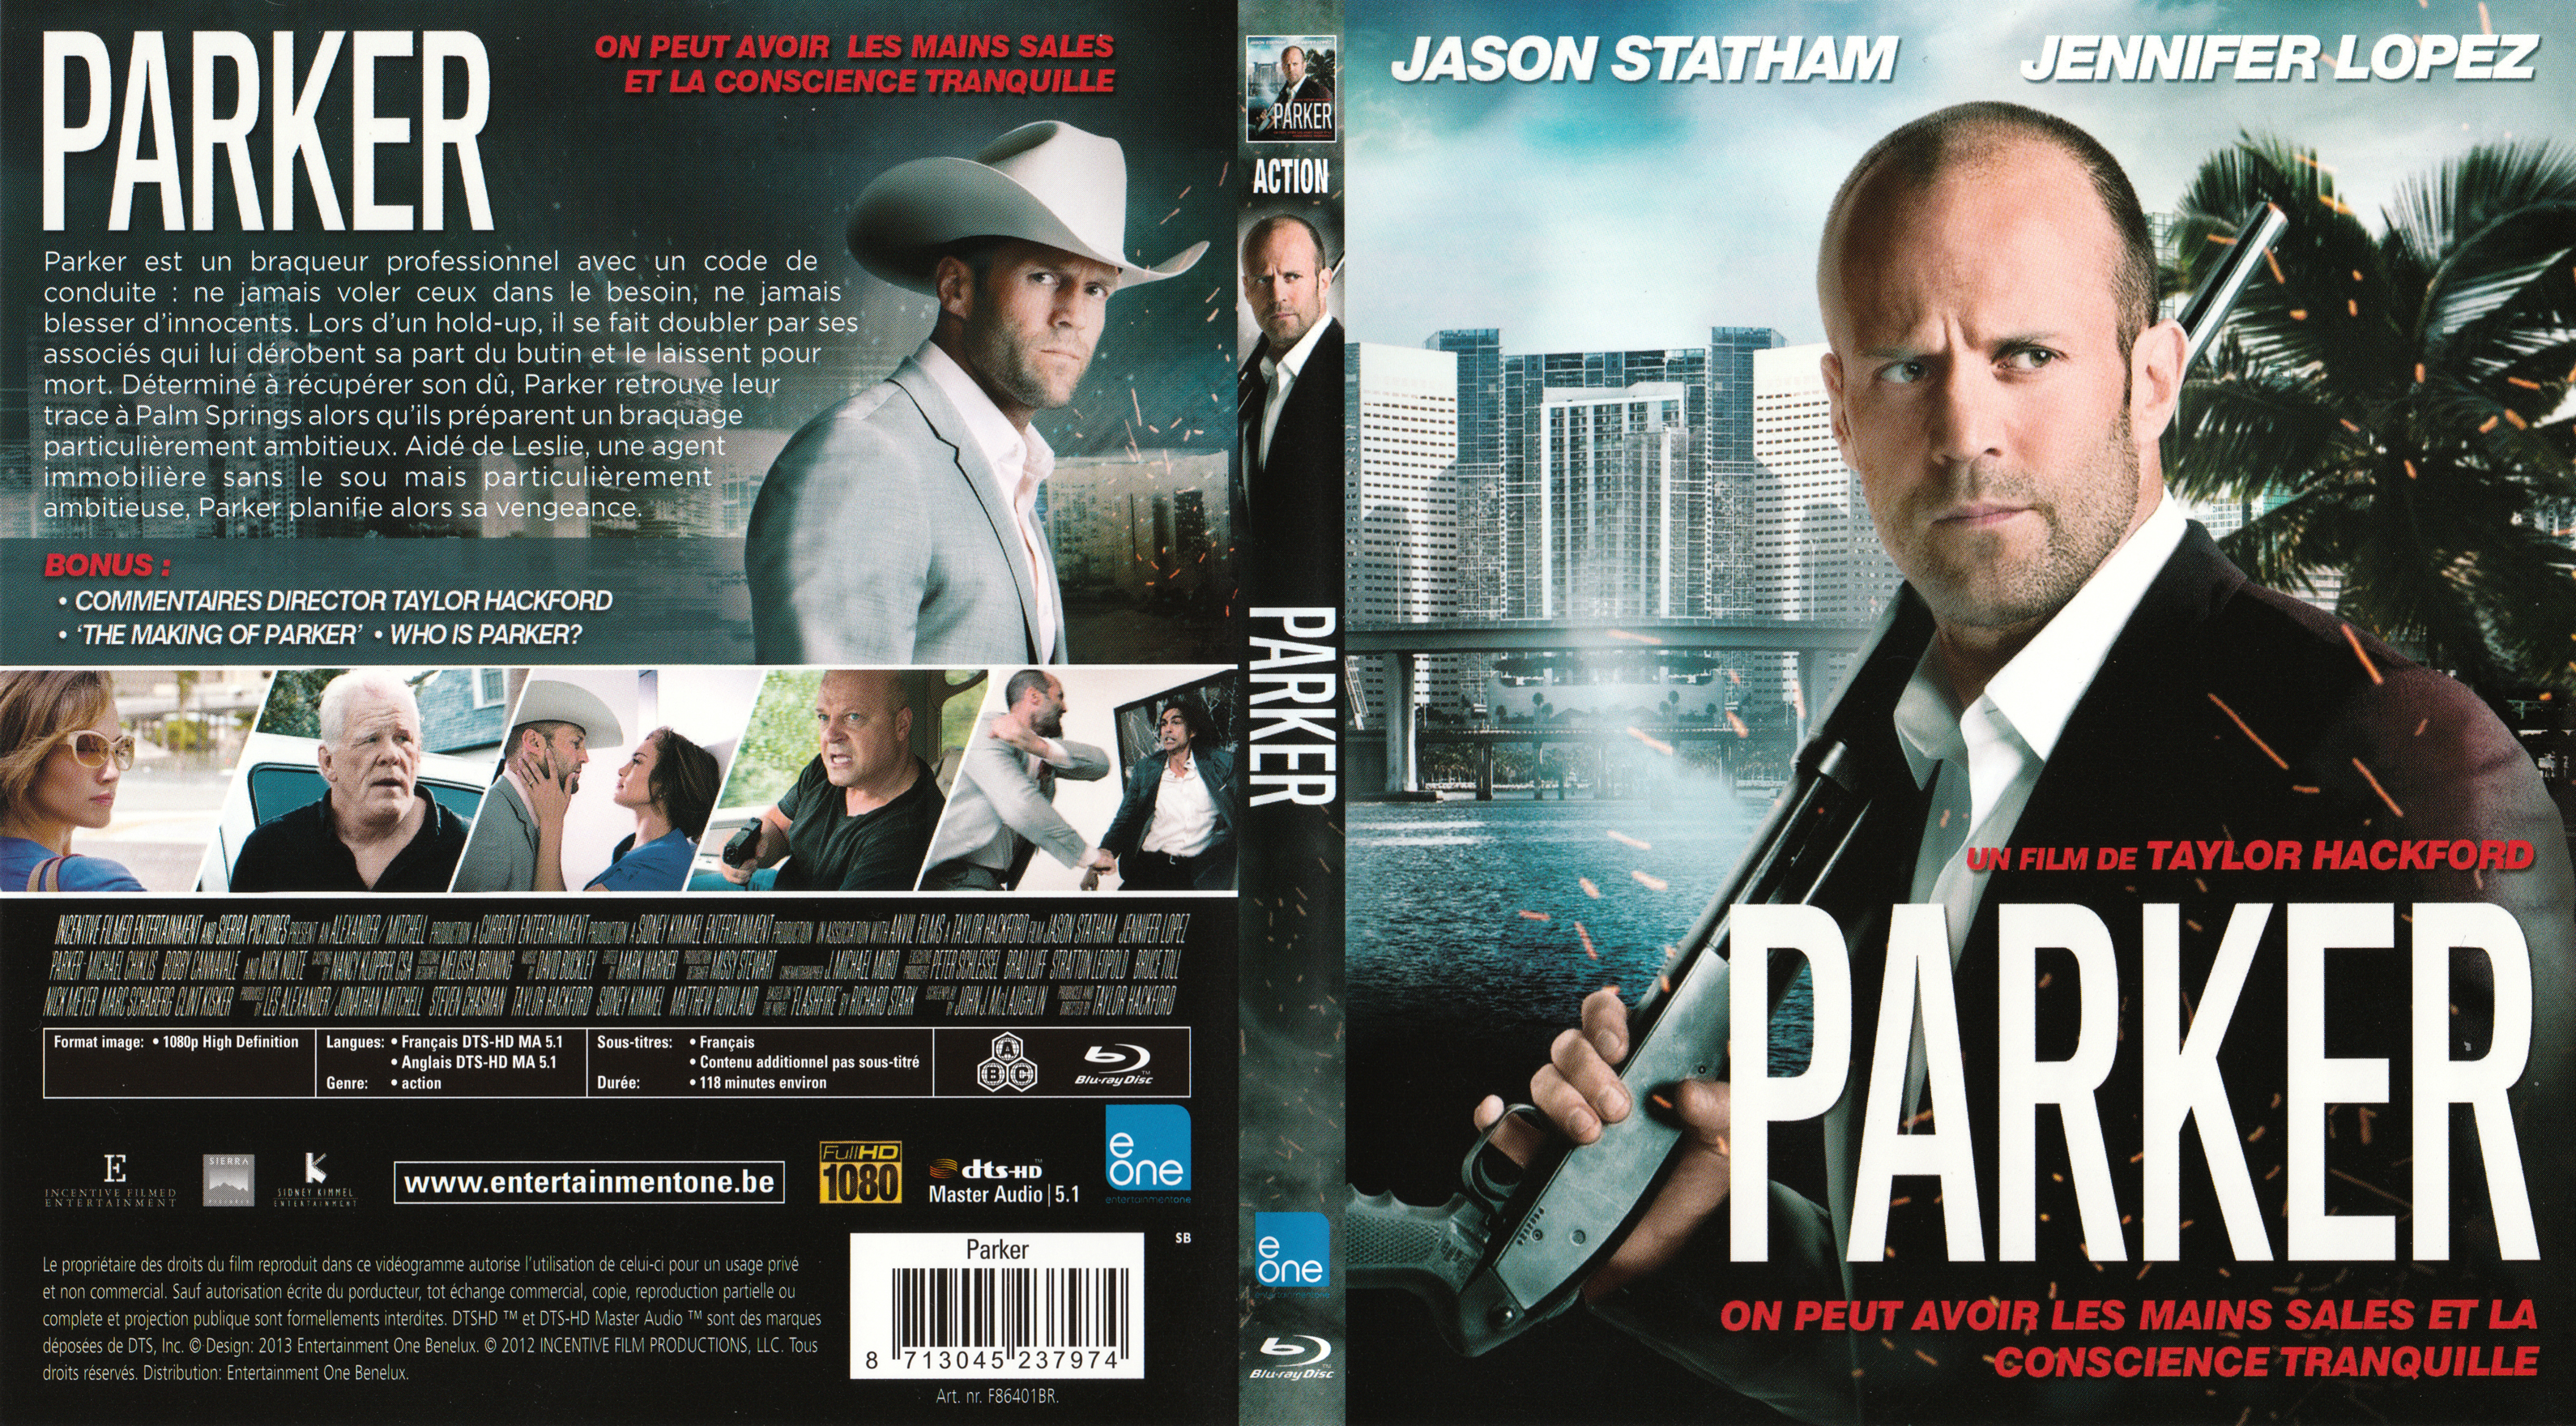 Jaquette DVD Parker (BLU-RAY) v2